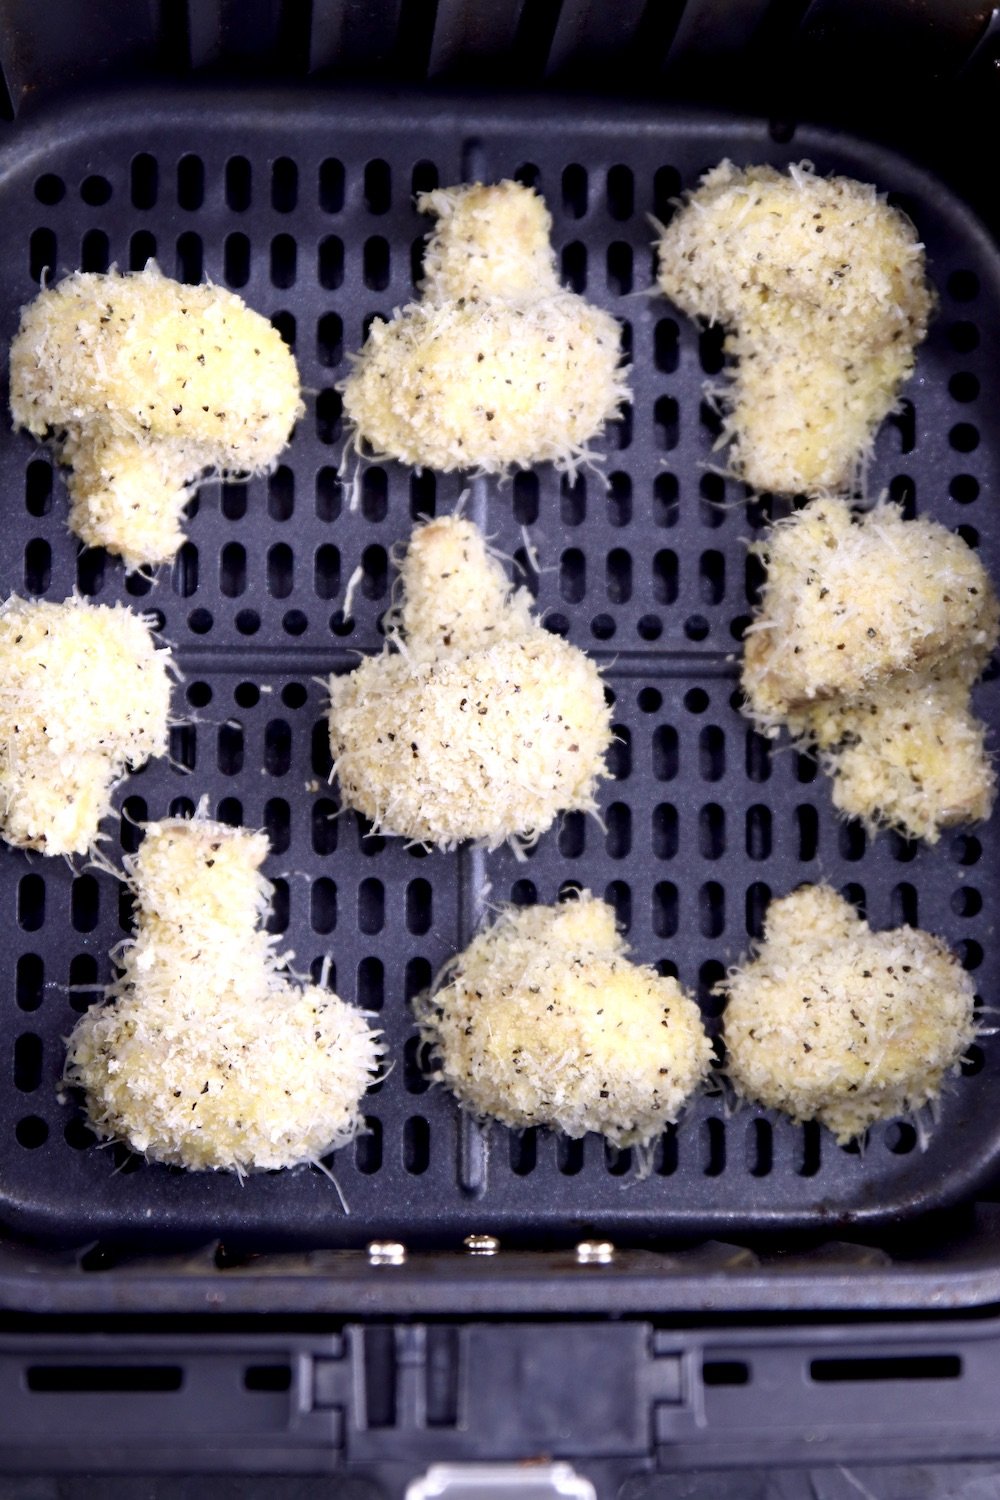 air fryer with breaded mushrooms